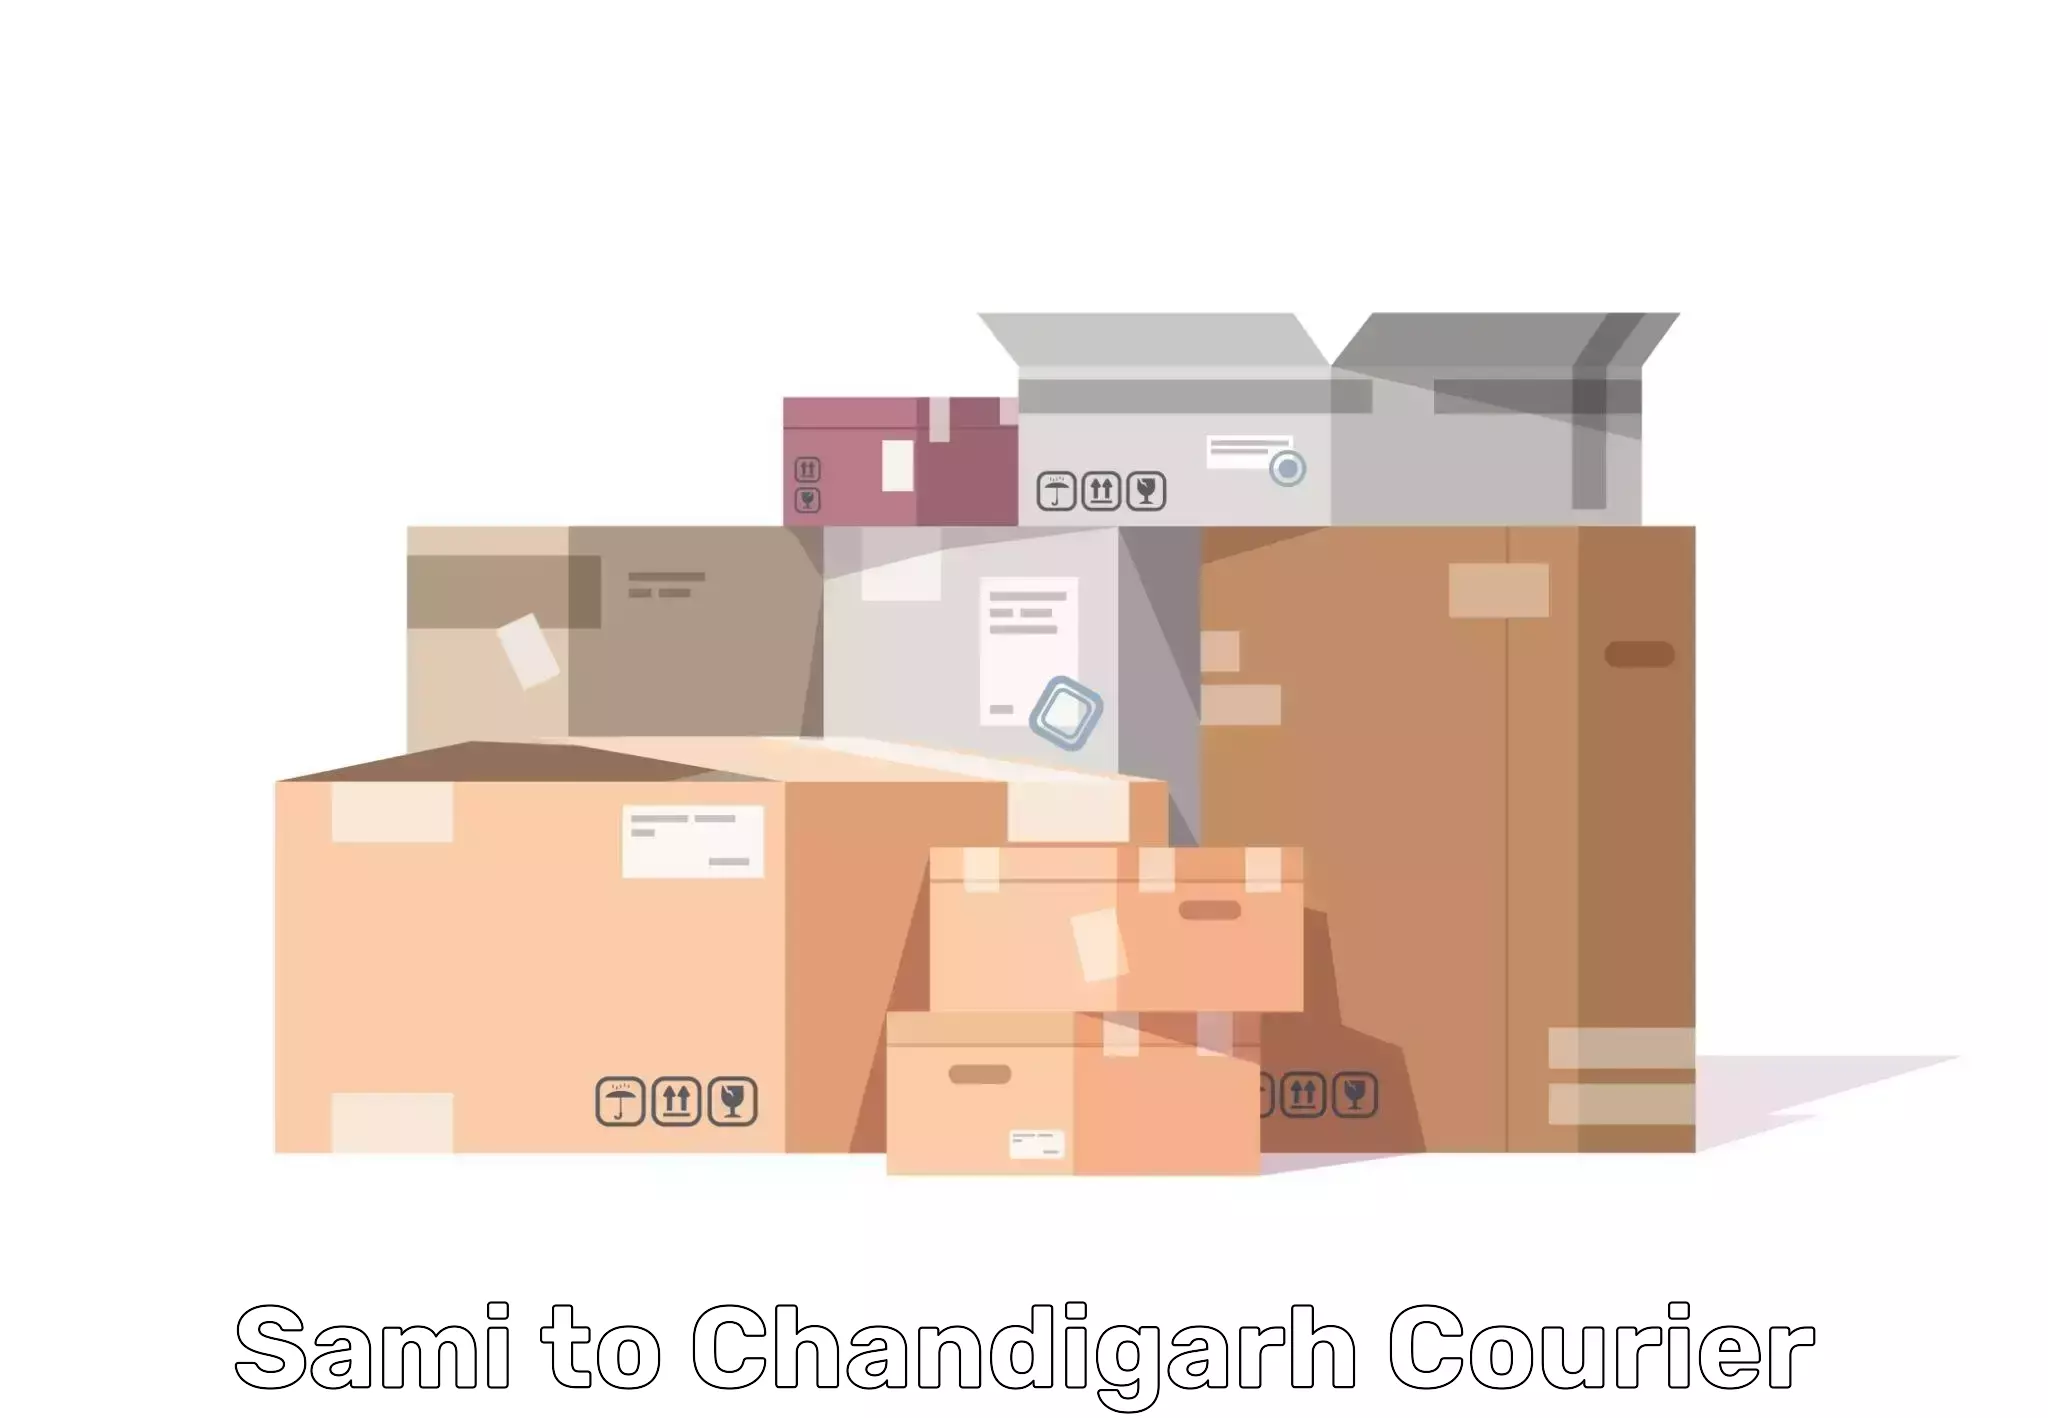 Professional moving company Sami to Chandigarh